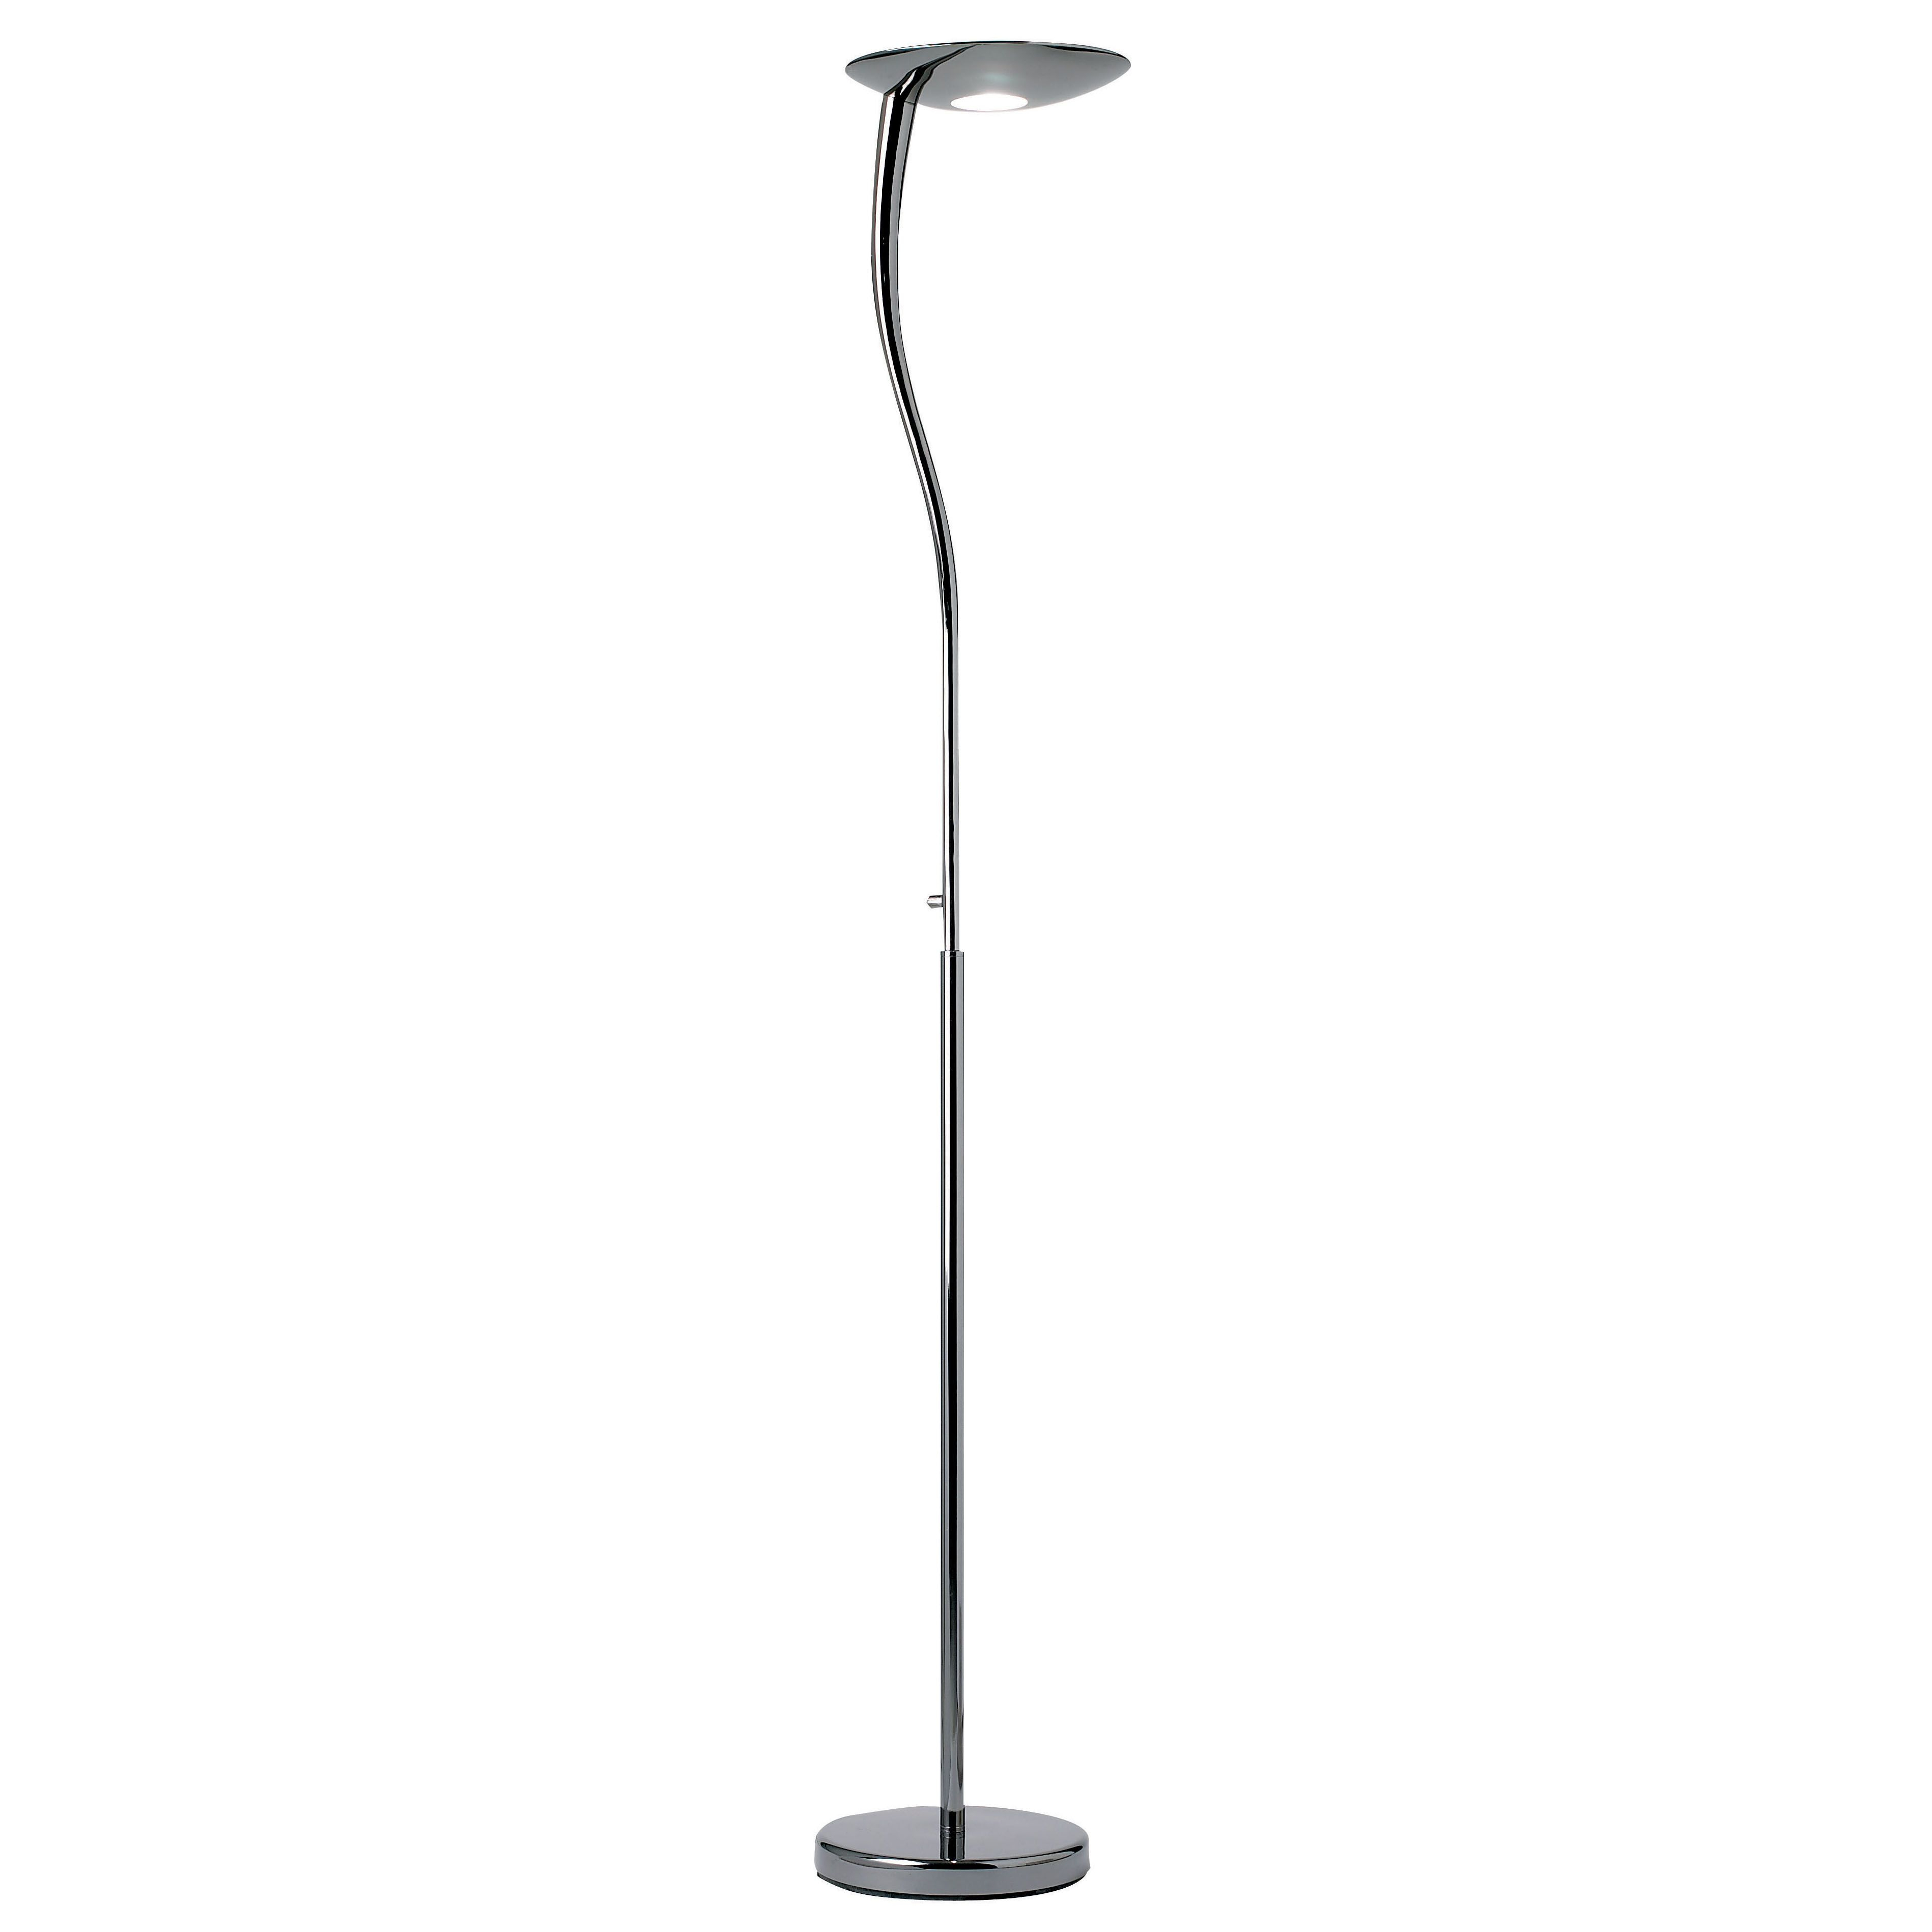 Black Chrome Halogen Floor Lamp Dimmer 300w Rimini Bc Lamps with measurements 3796 X 3796